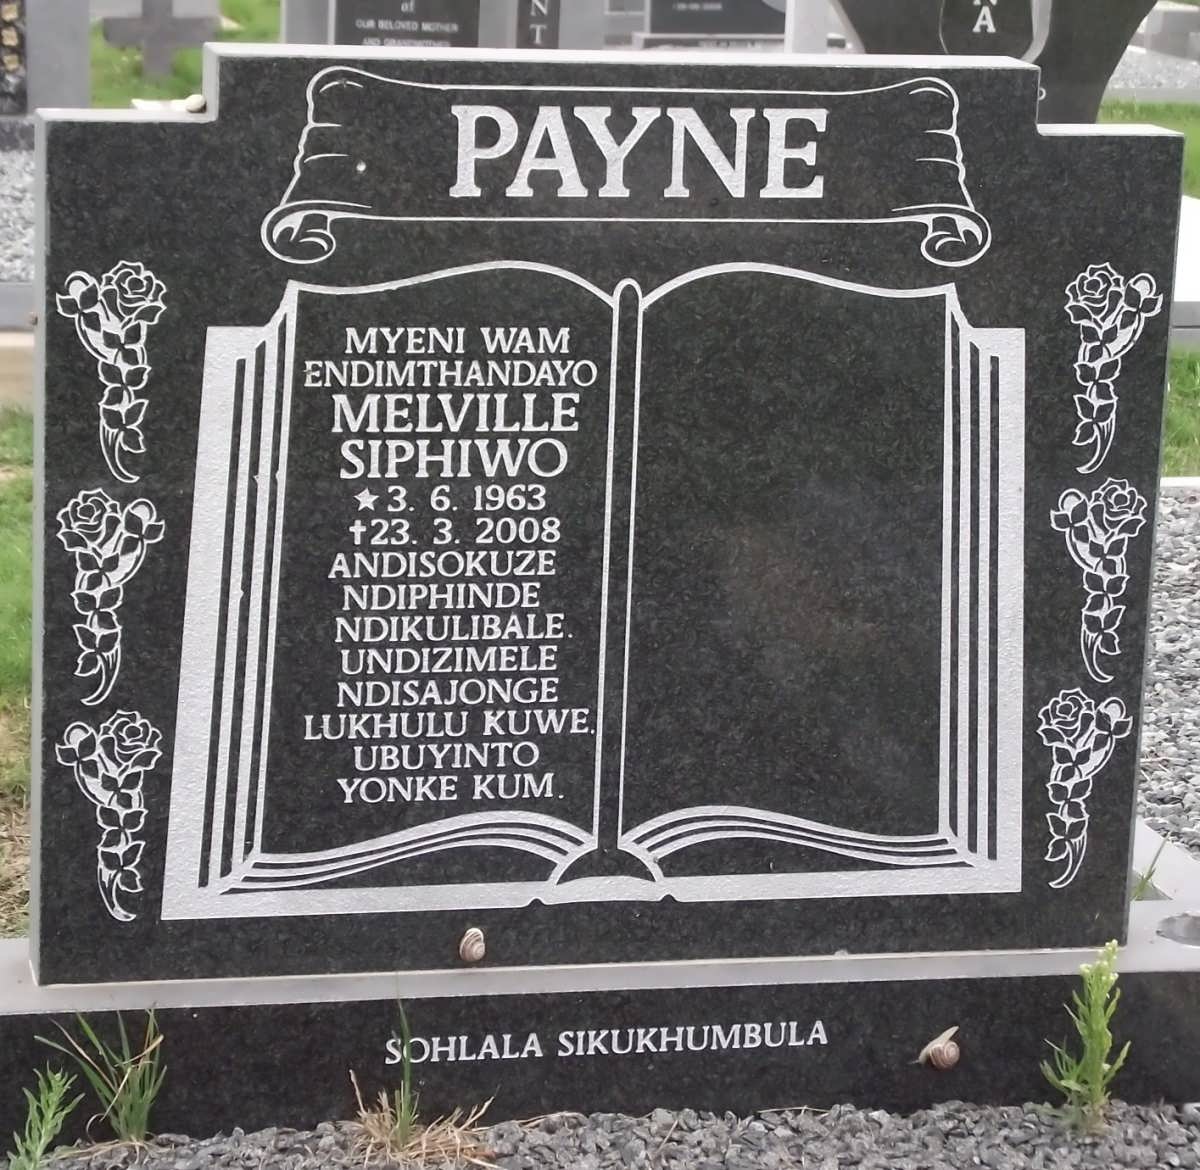 PAYNE Melville Siphiwo 1963-2008